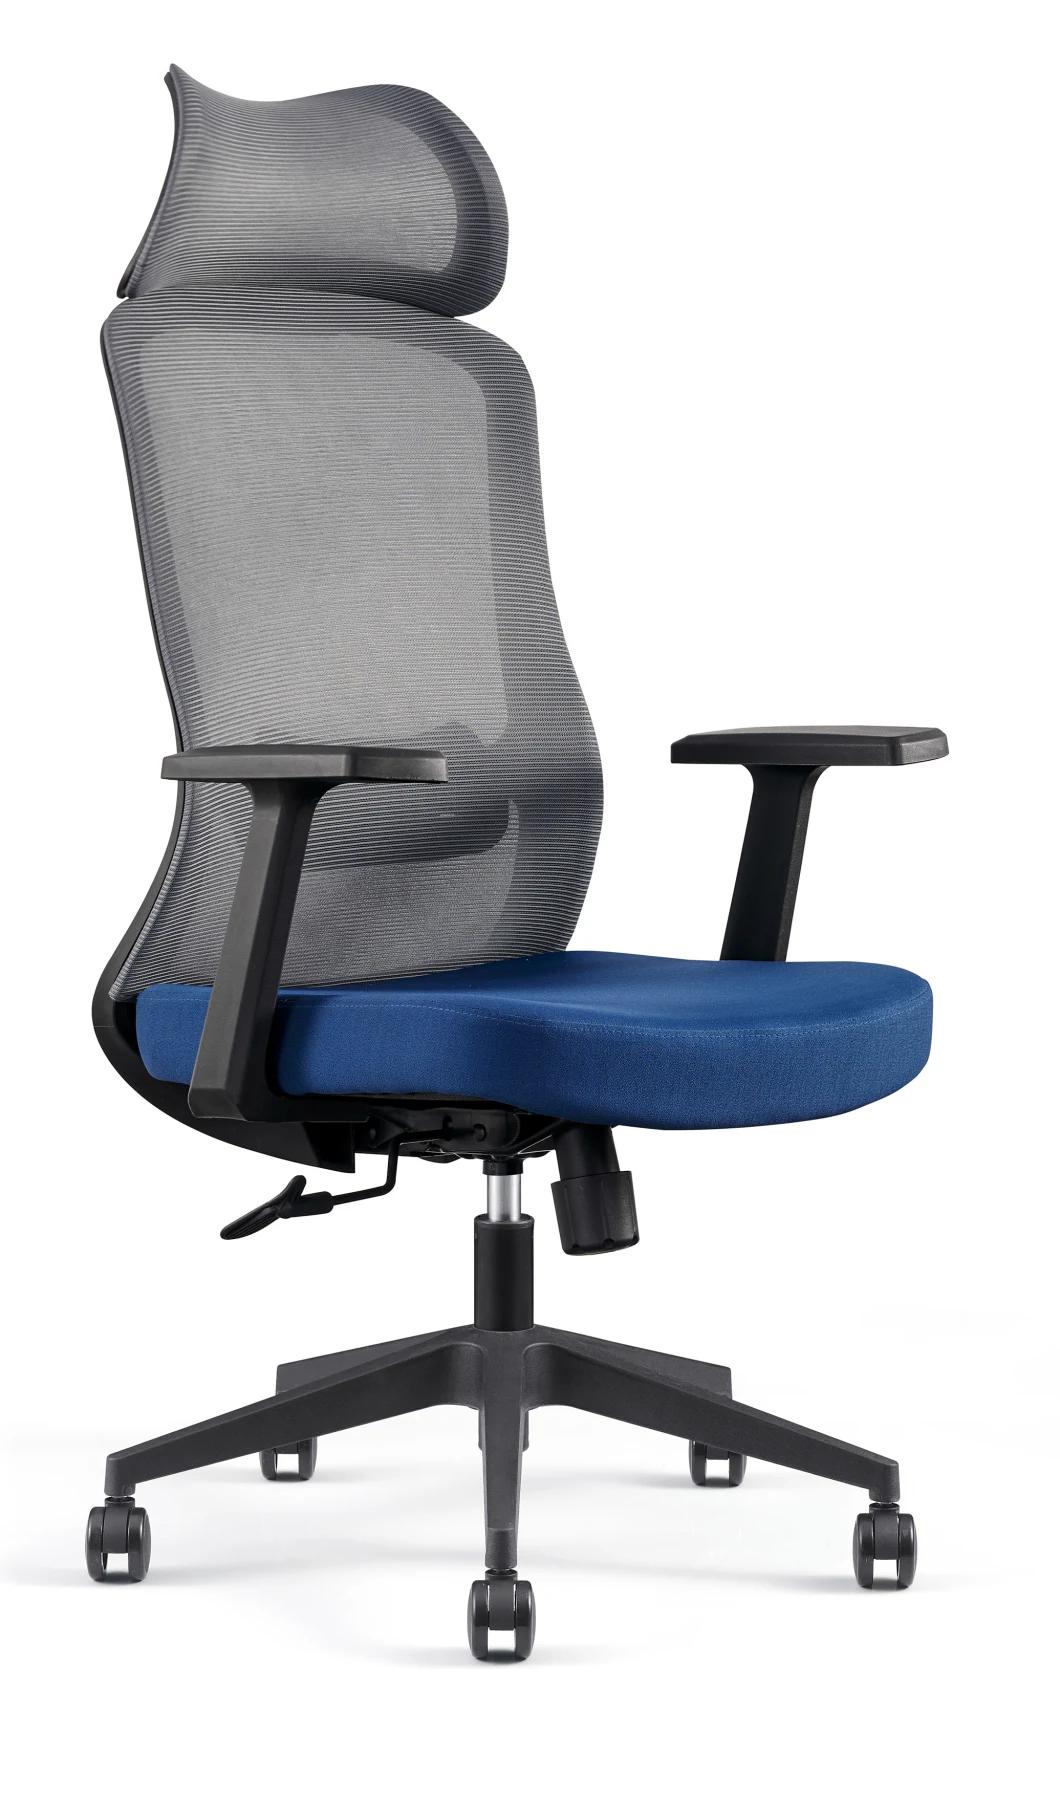 B2098 Swival Morden Office Furniture Mesh Chair